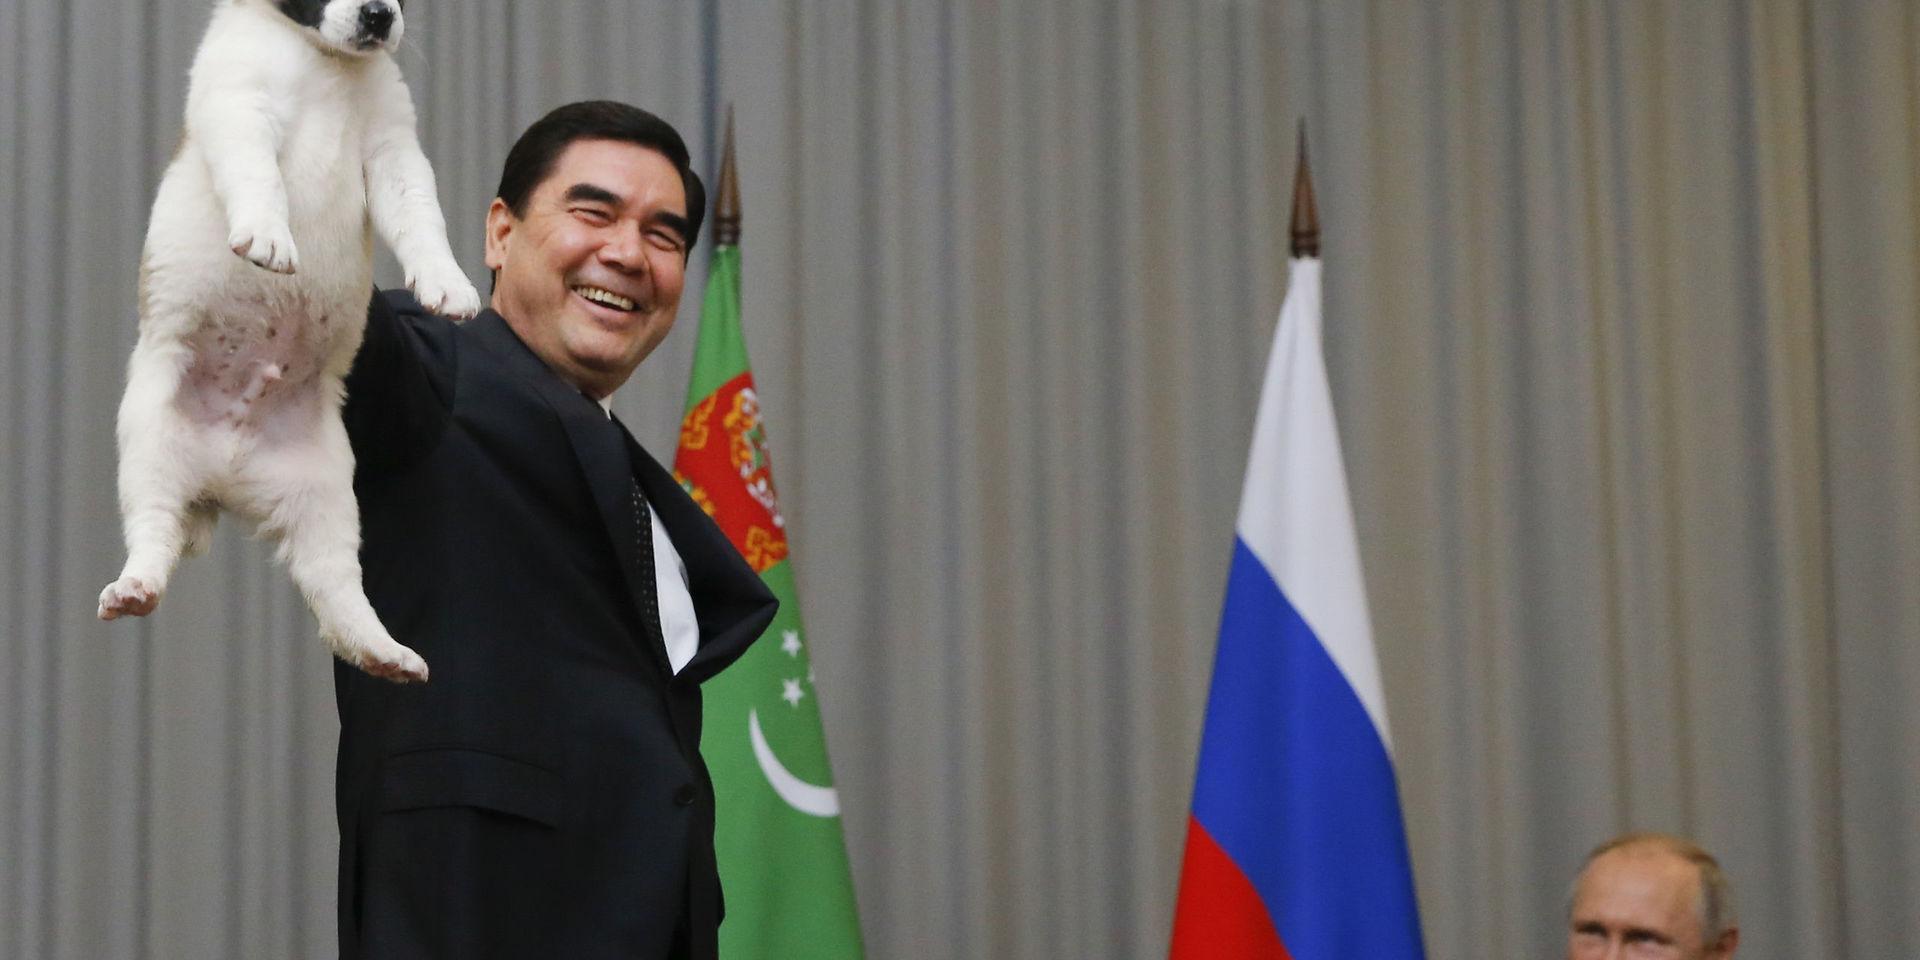 Turkmenistans president Gurbanguly Berdymuchamedov ger sin ryske motsvarighet Vladimir Putin en hundvalp under ett möte i Sotji 2017.